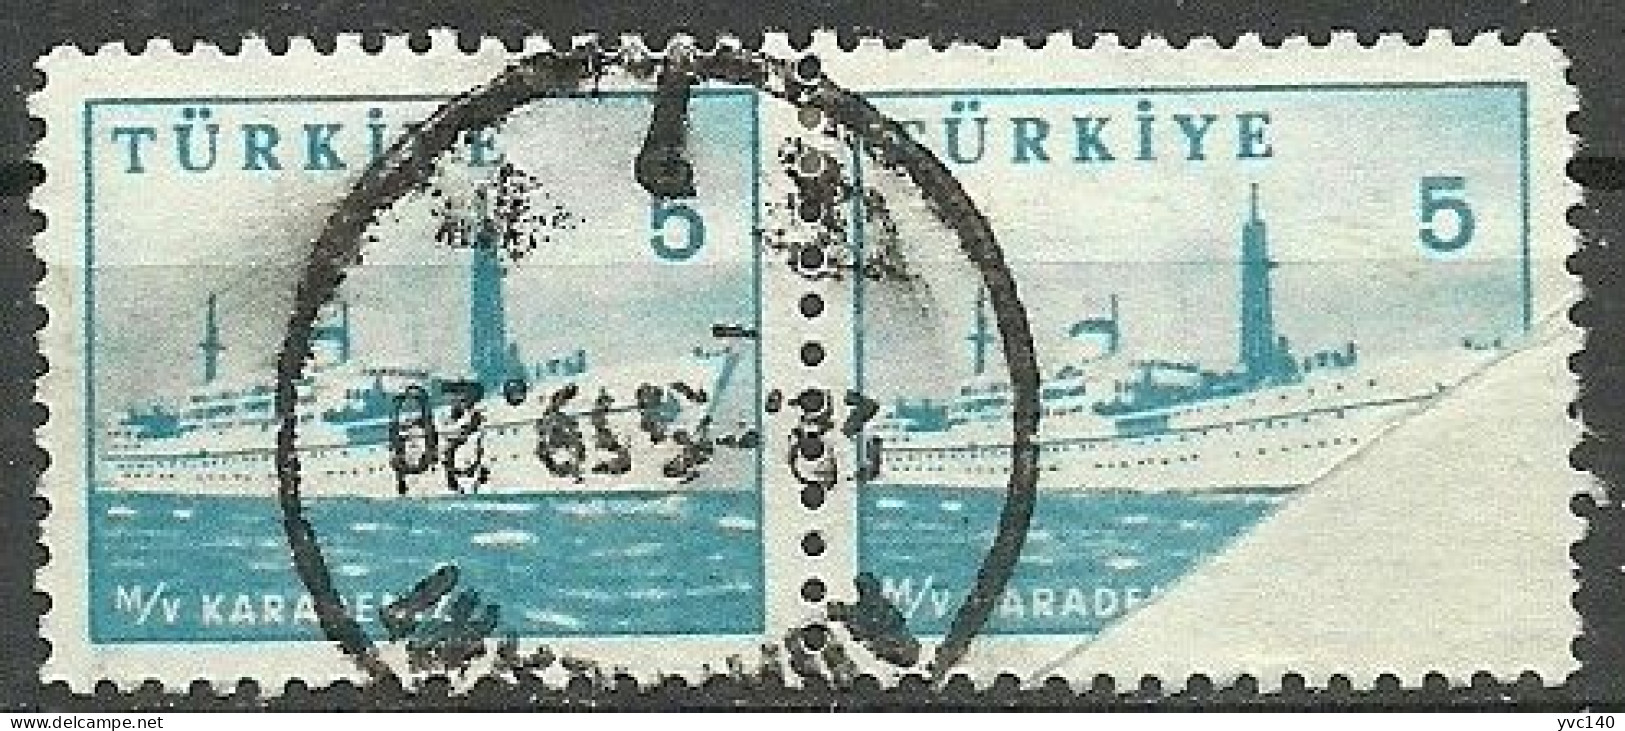 Turkey; 1959 Pictorial Postage Stamp 5 K. "Folding ERROR" - Used Stamps